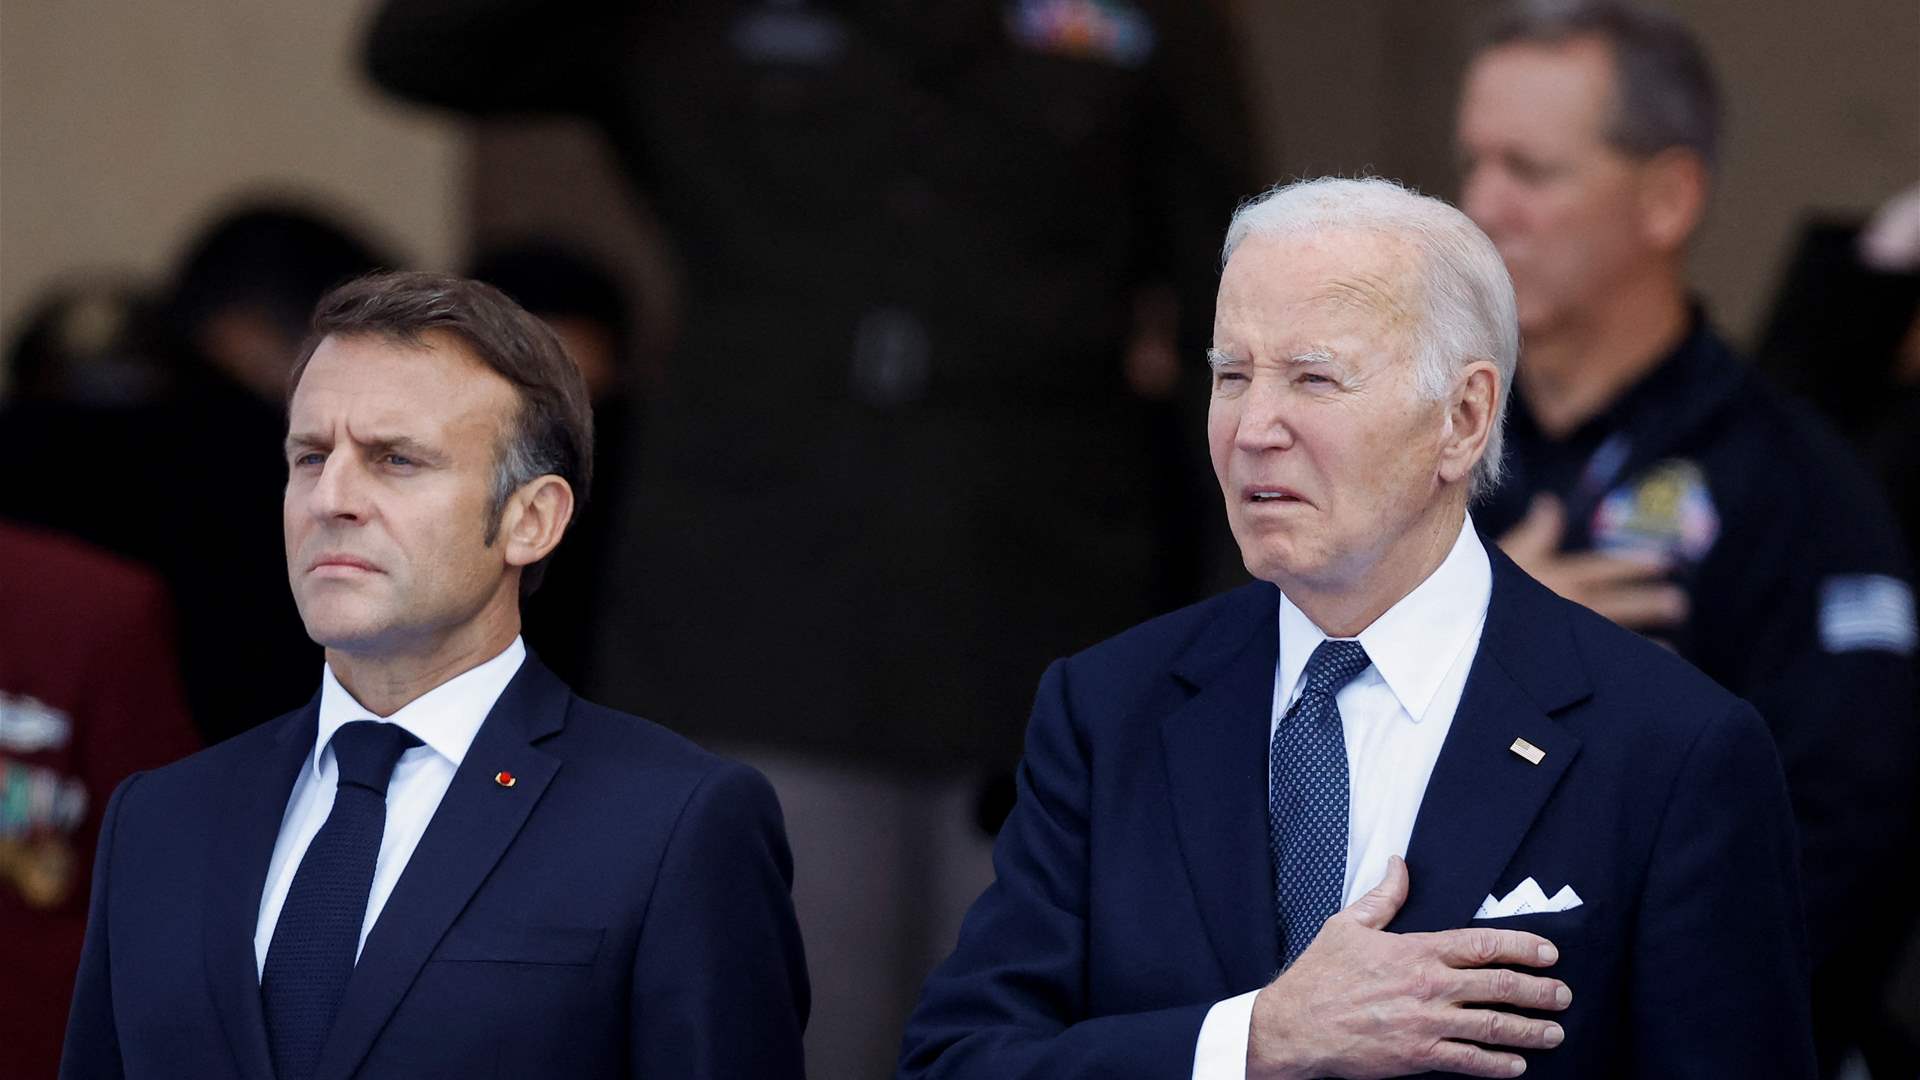 Biden, Macron to discuss Israel and Ukraine in state visit